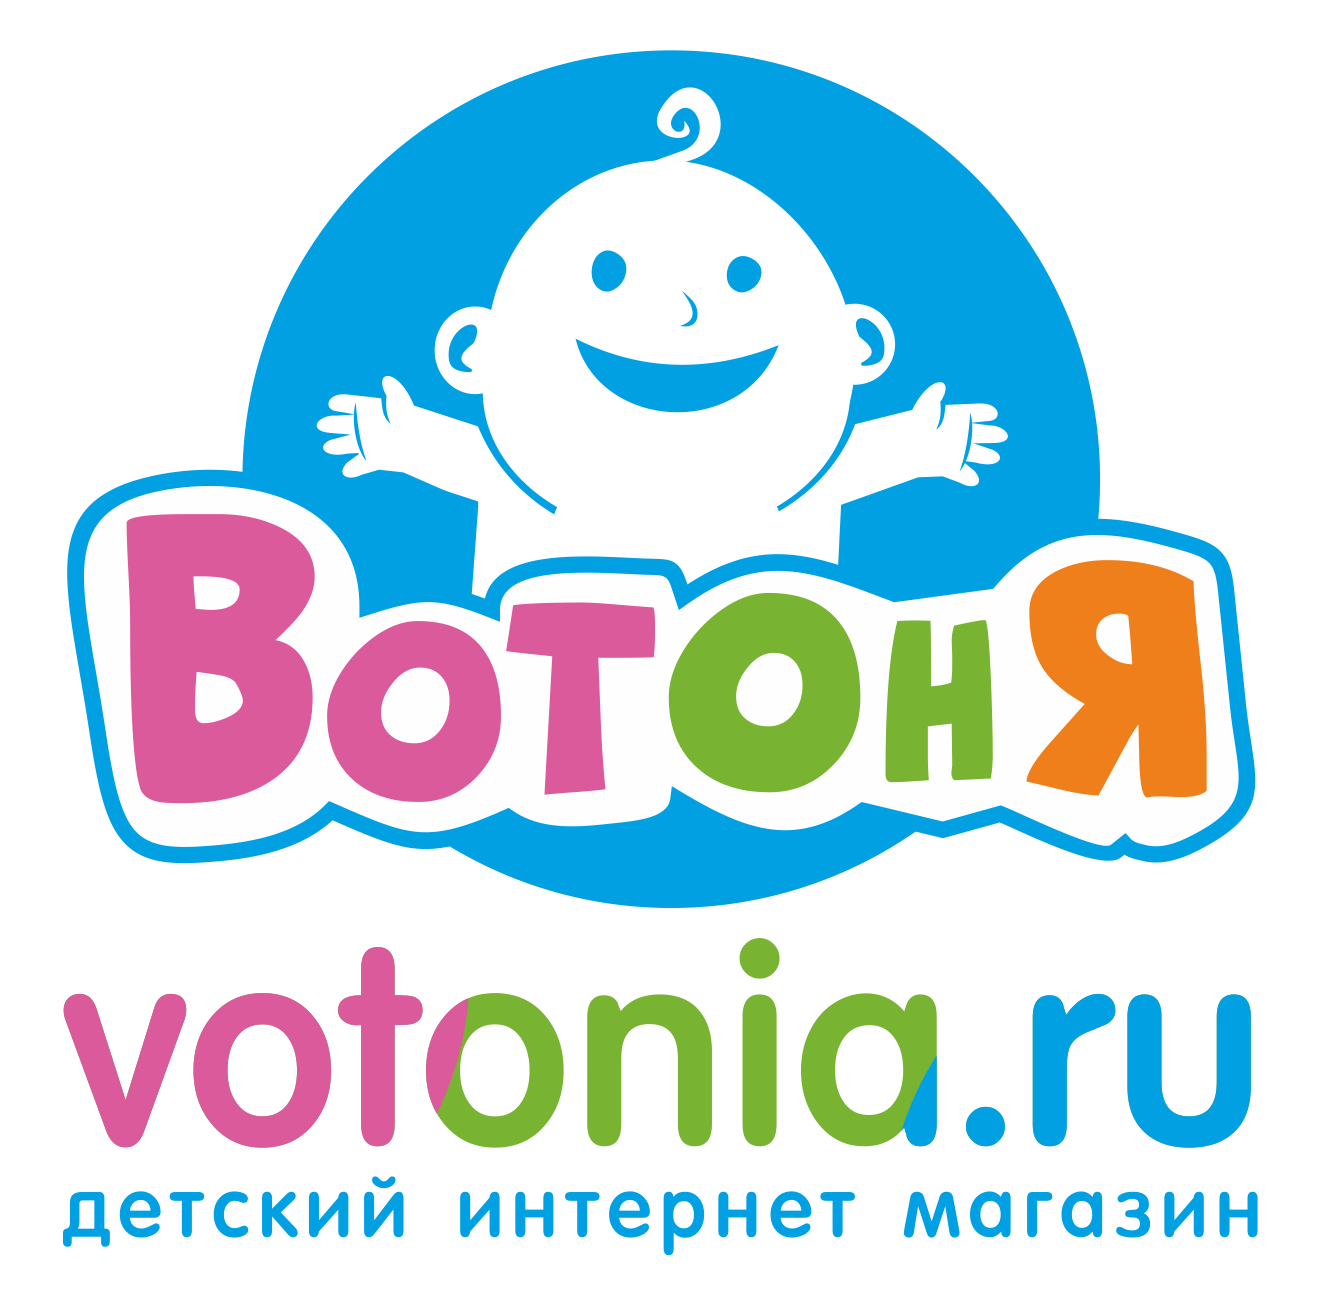 www.votonia.ru